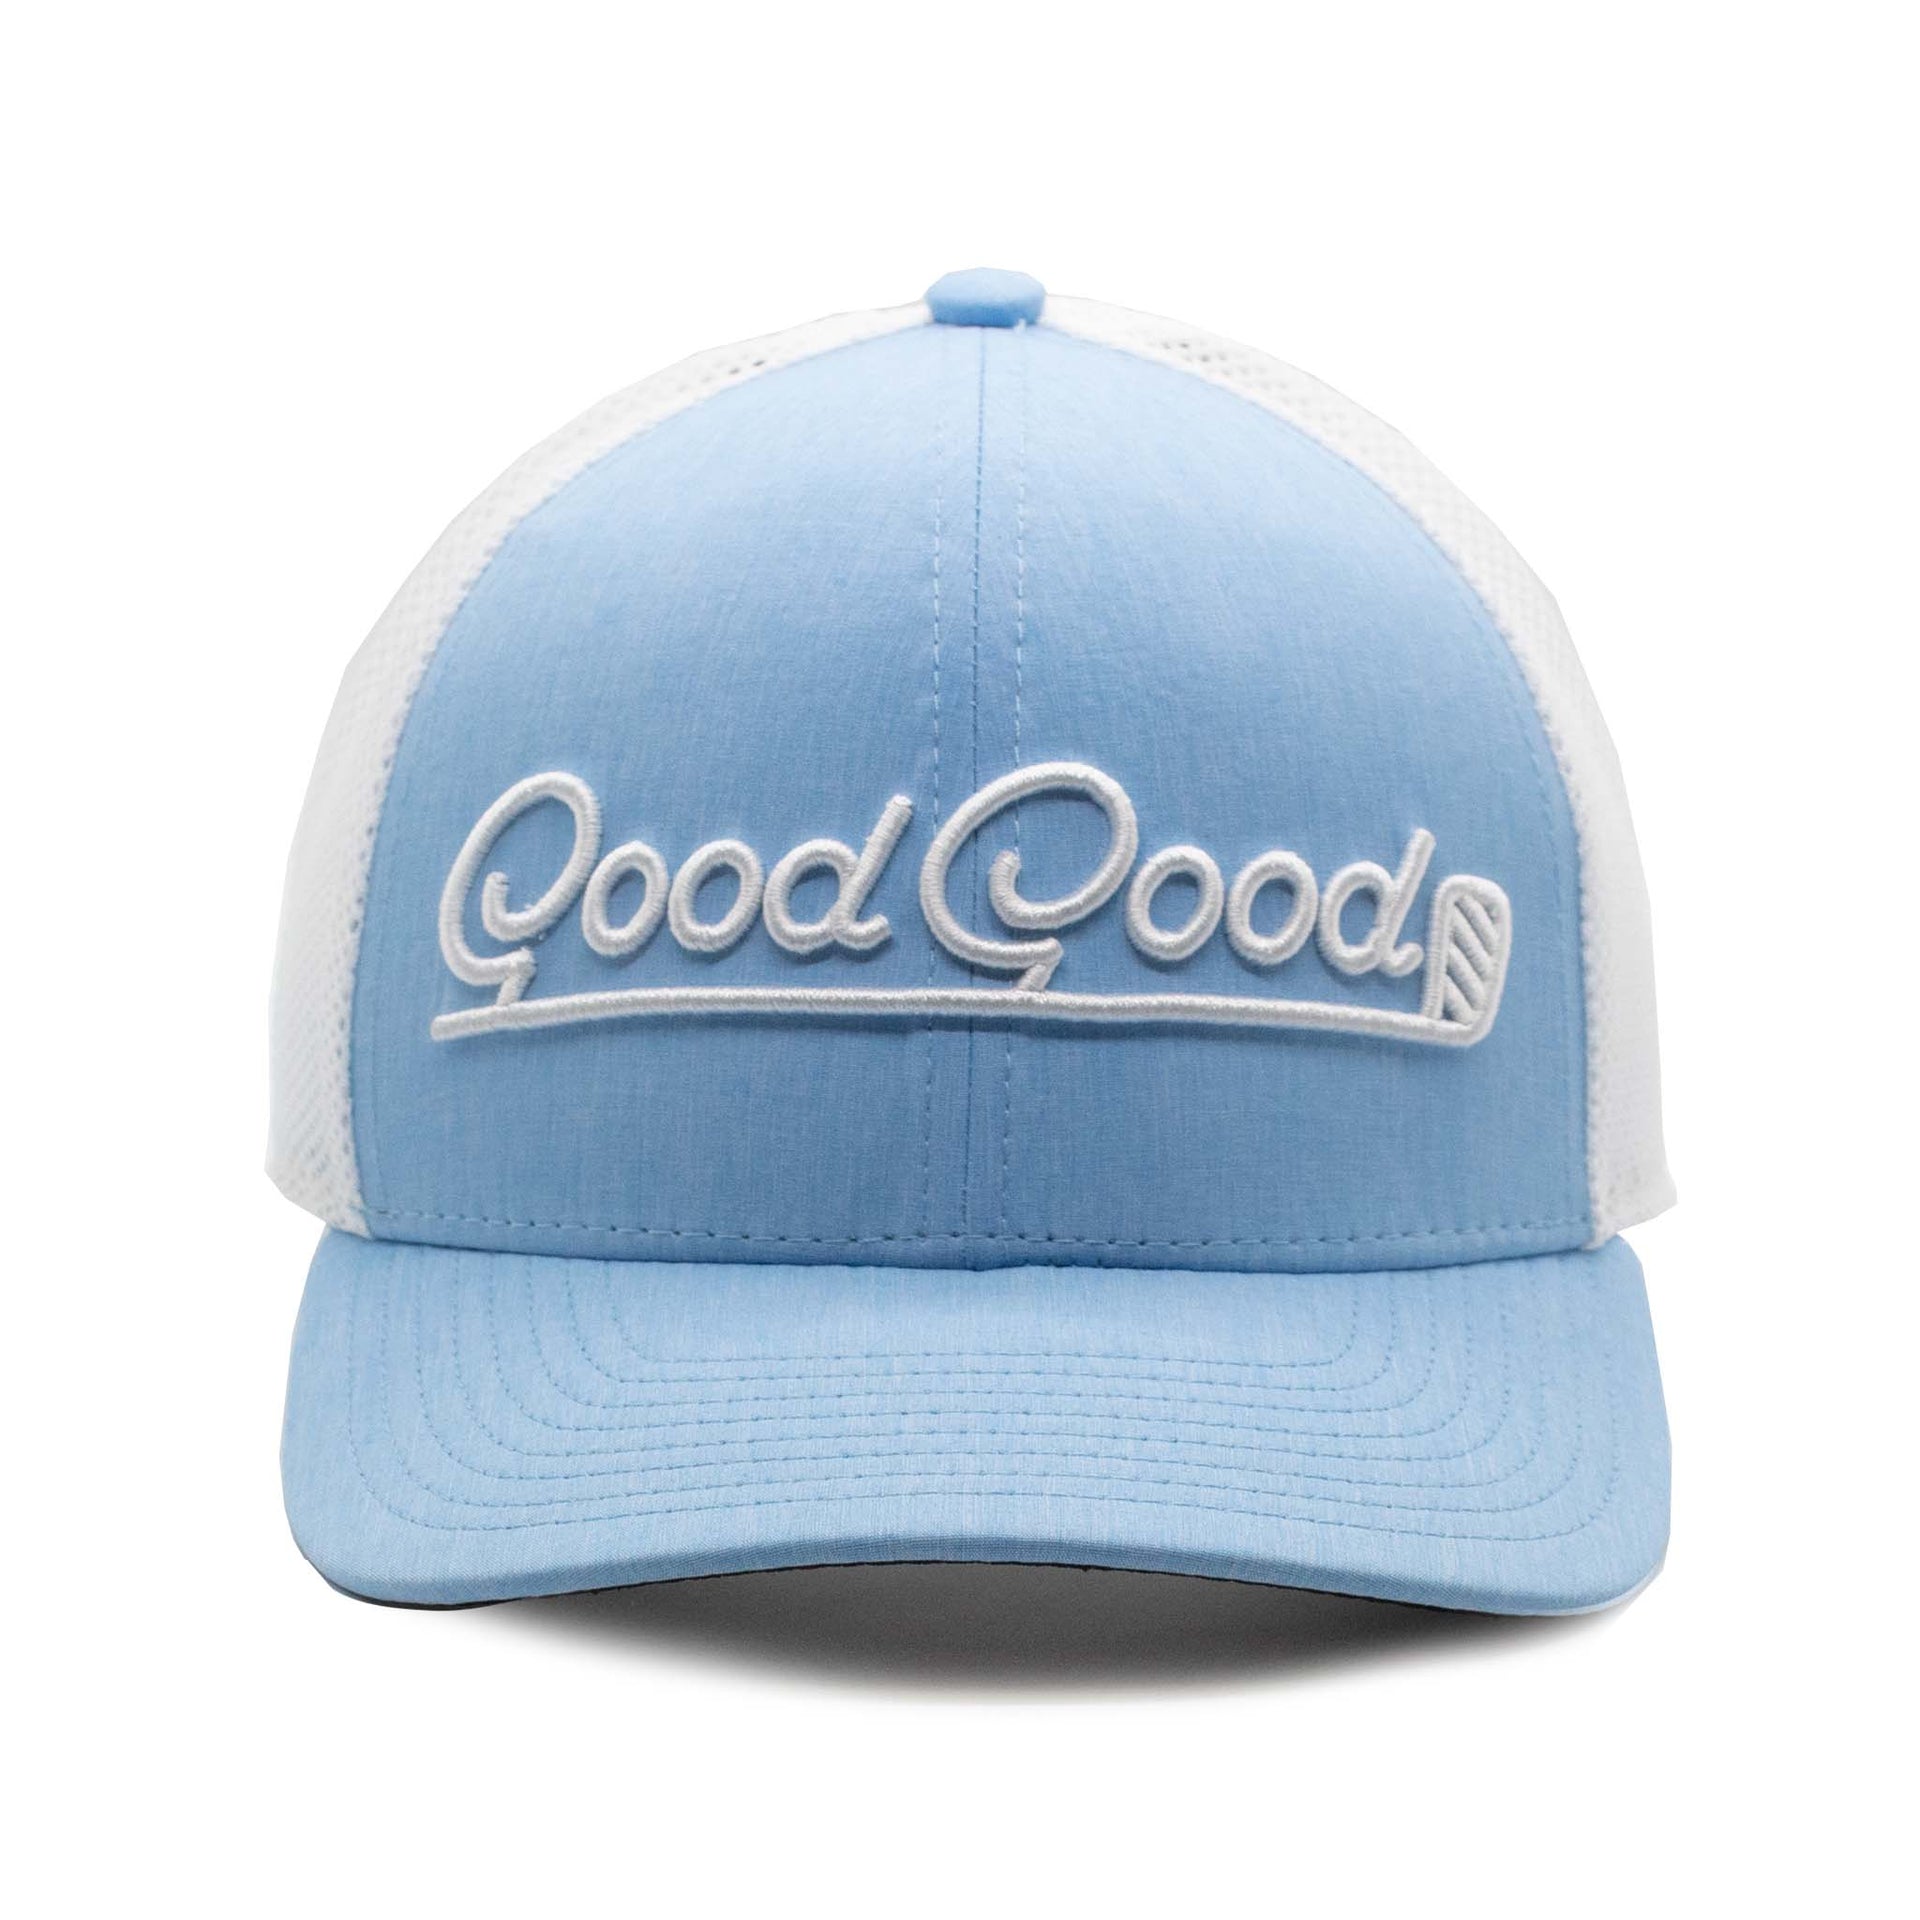 Classic Trucker Hat - Golf & Stuff - Light Blue